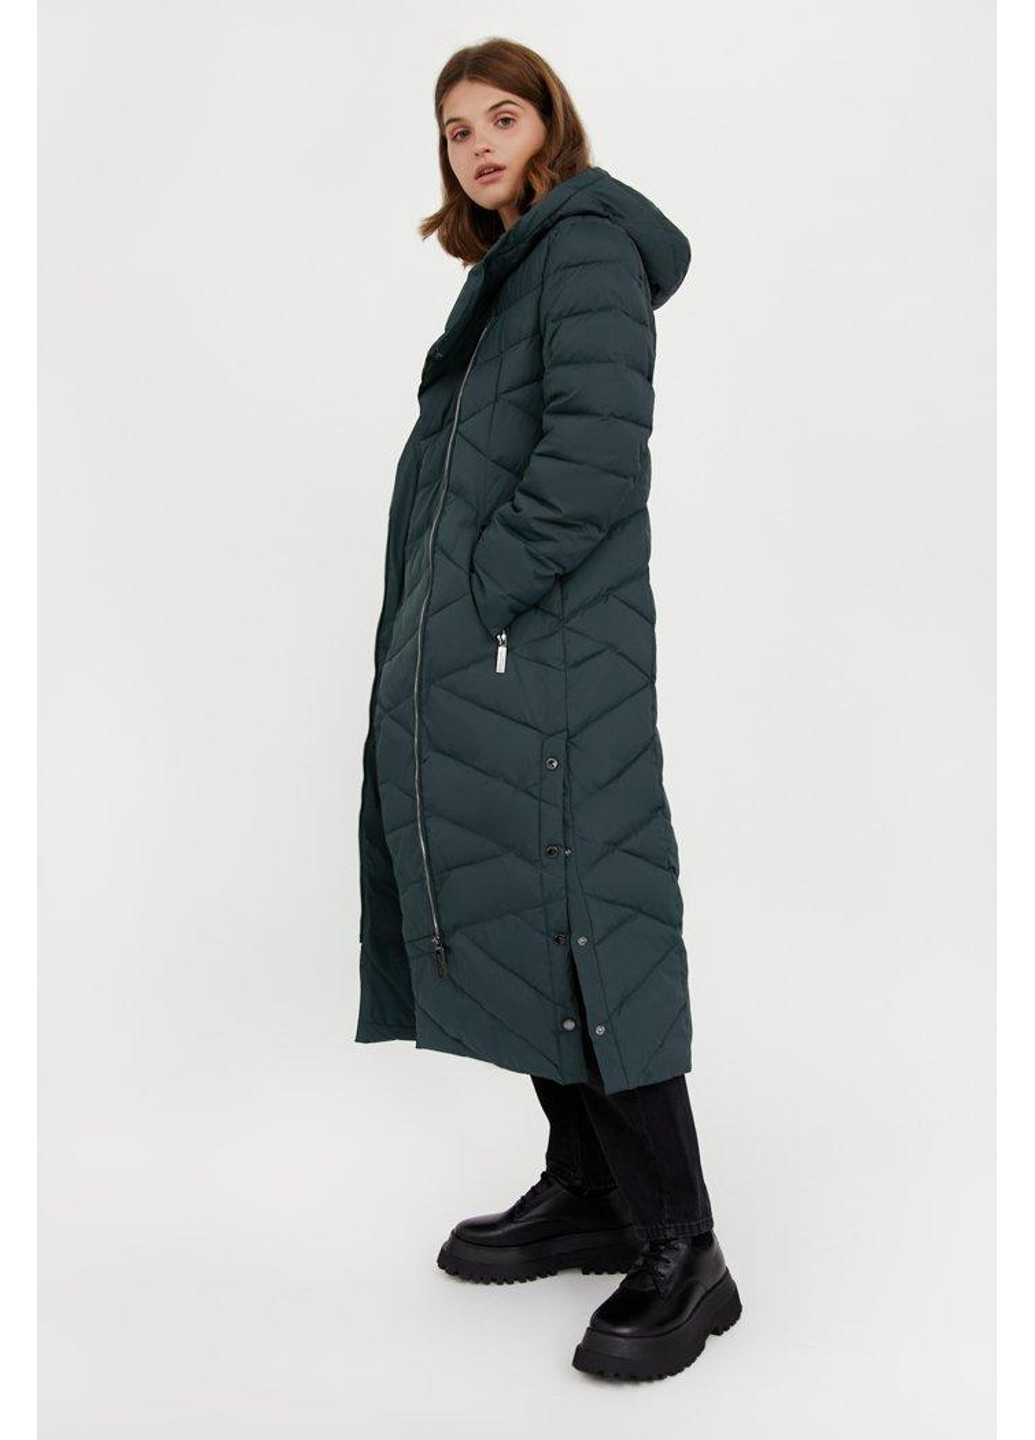 Зеленая зимняя зимняя куртка va20-11009-506 Finn Flare